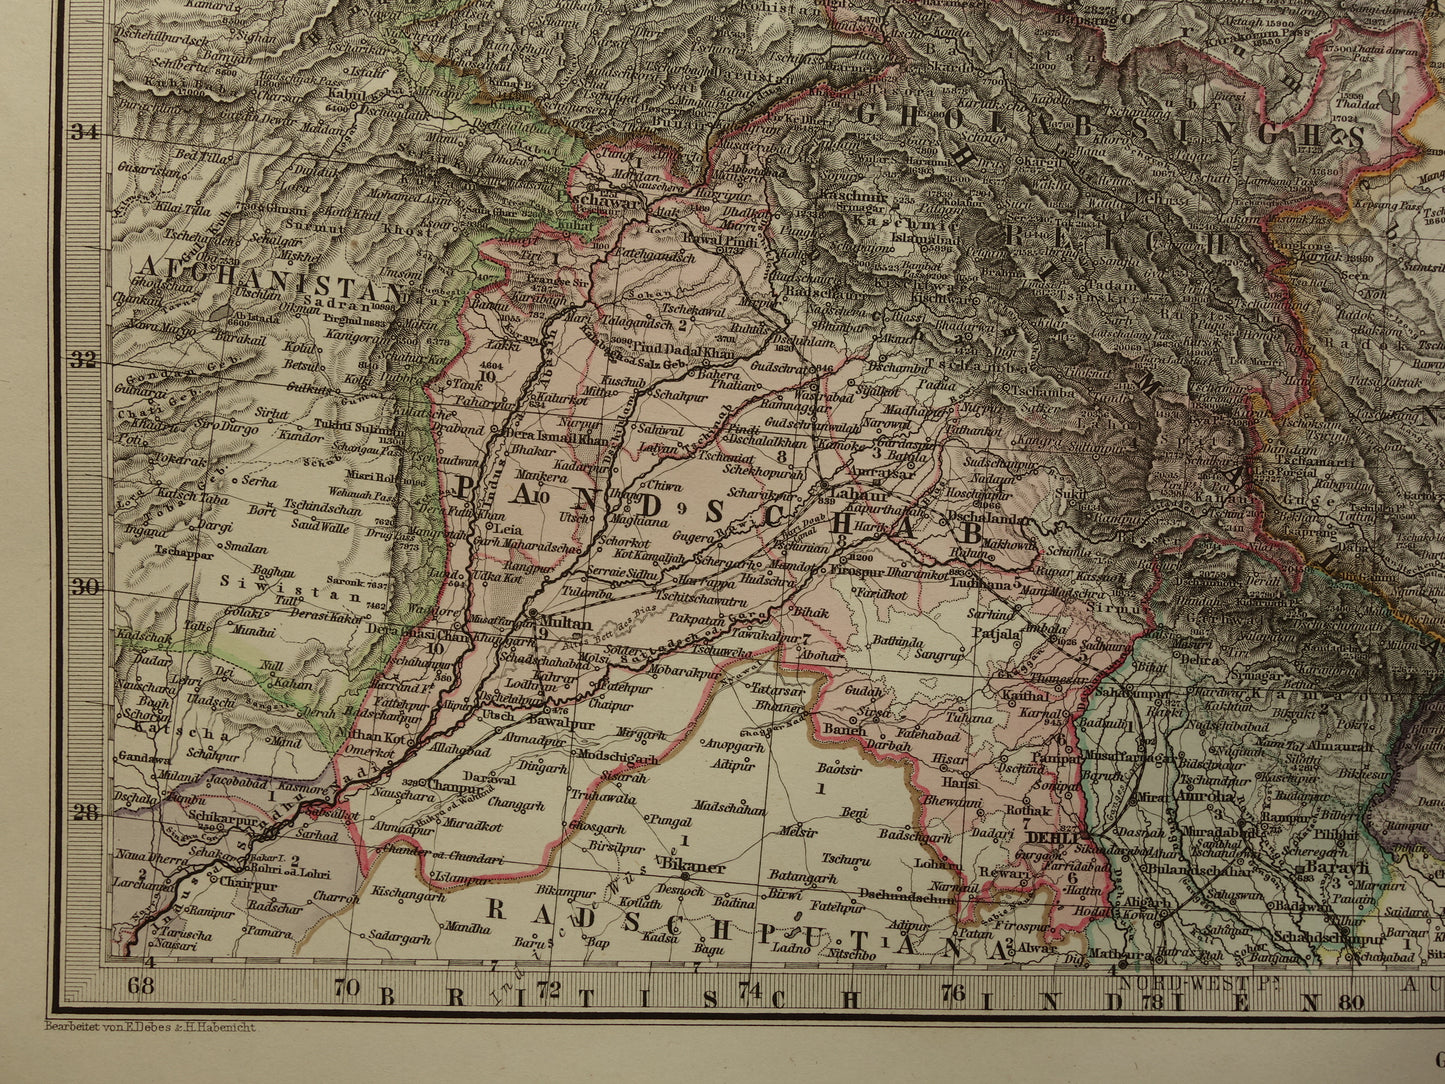 CENTRAAL-AZIË oude kaart van Tibet Kashmir Turkestan Himalaya antieke Duitse kaart Oezbekistan Kirgizië Tadzjikistan